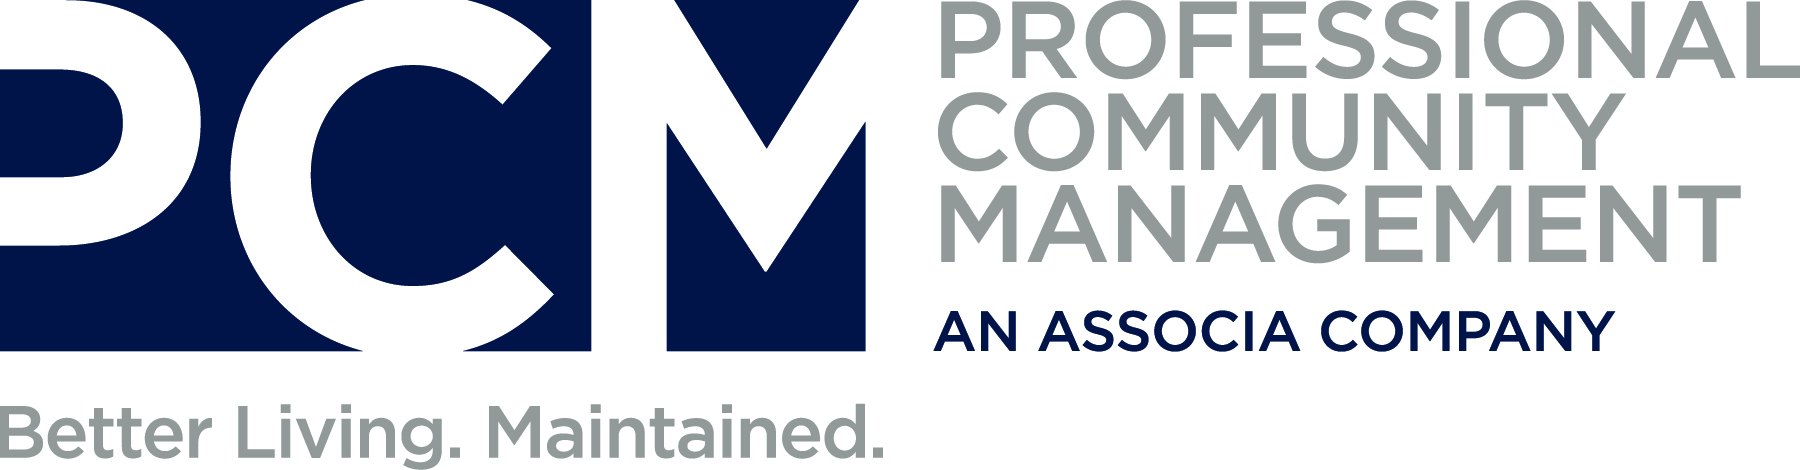 Professional Community Management, AAMC